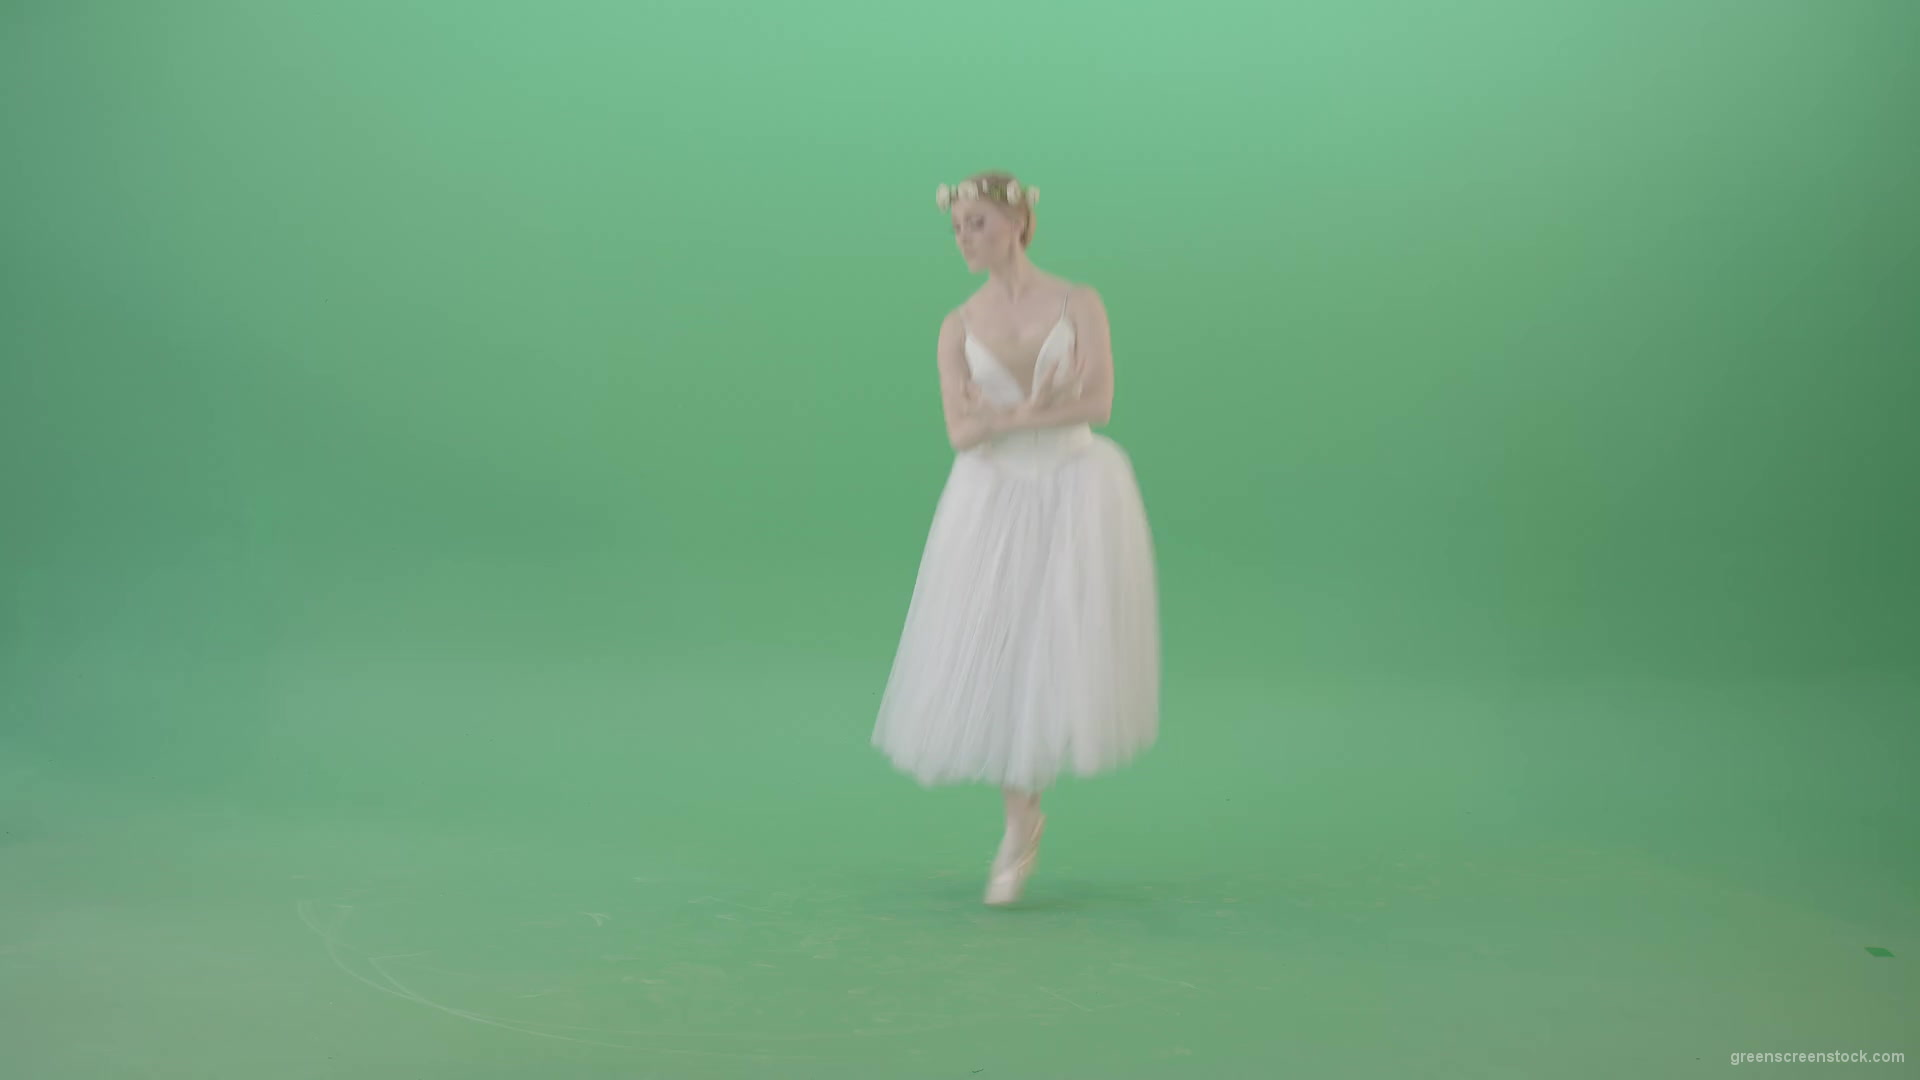 Beautiful-jumping-ballet-dancing-girl-choreograph-jumps-on-green-screen-4K-Video-Footage-1920_009 Green Screen Stock